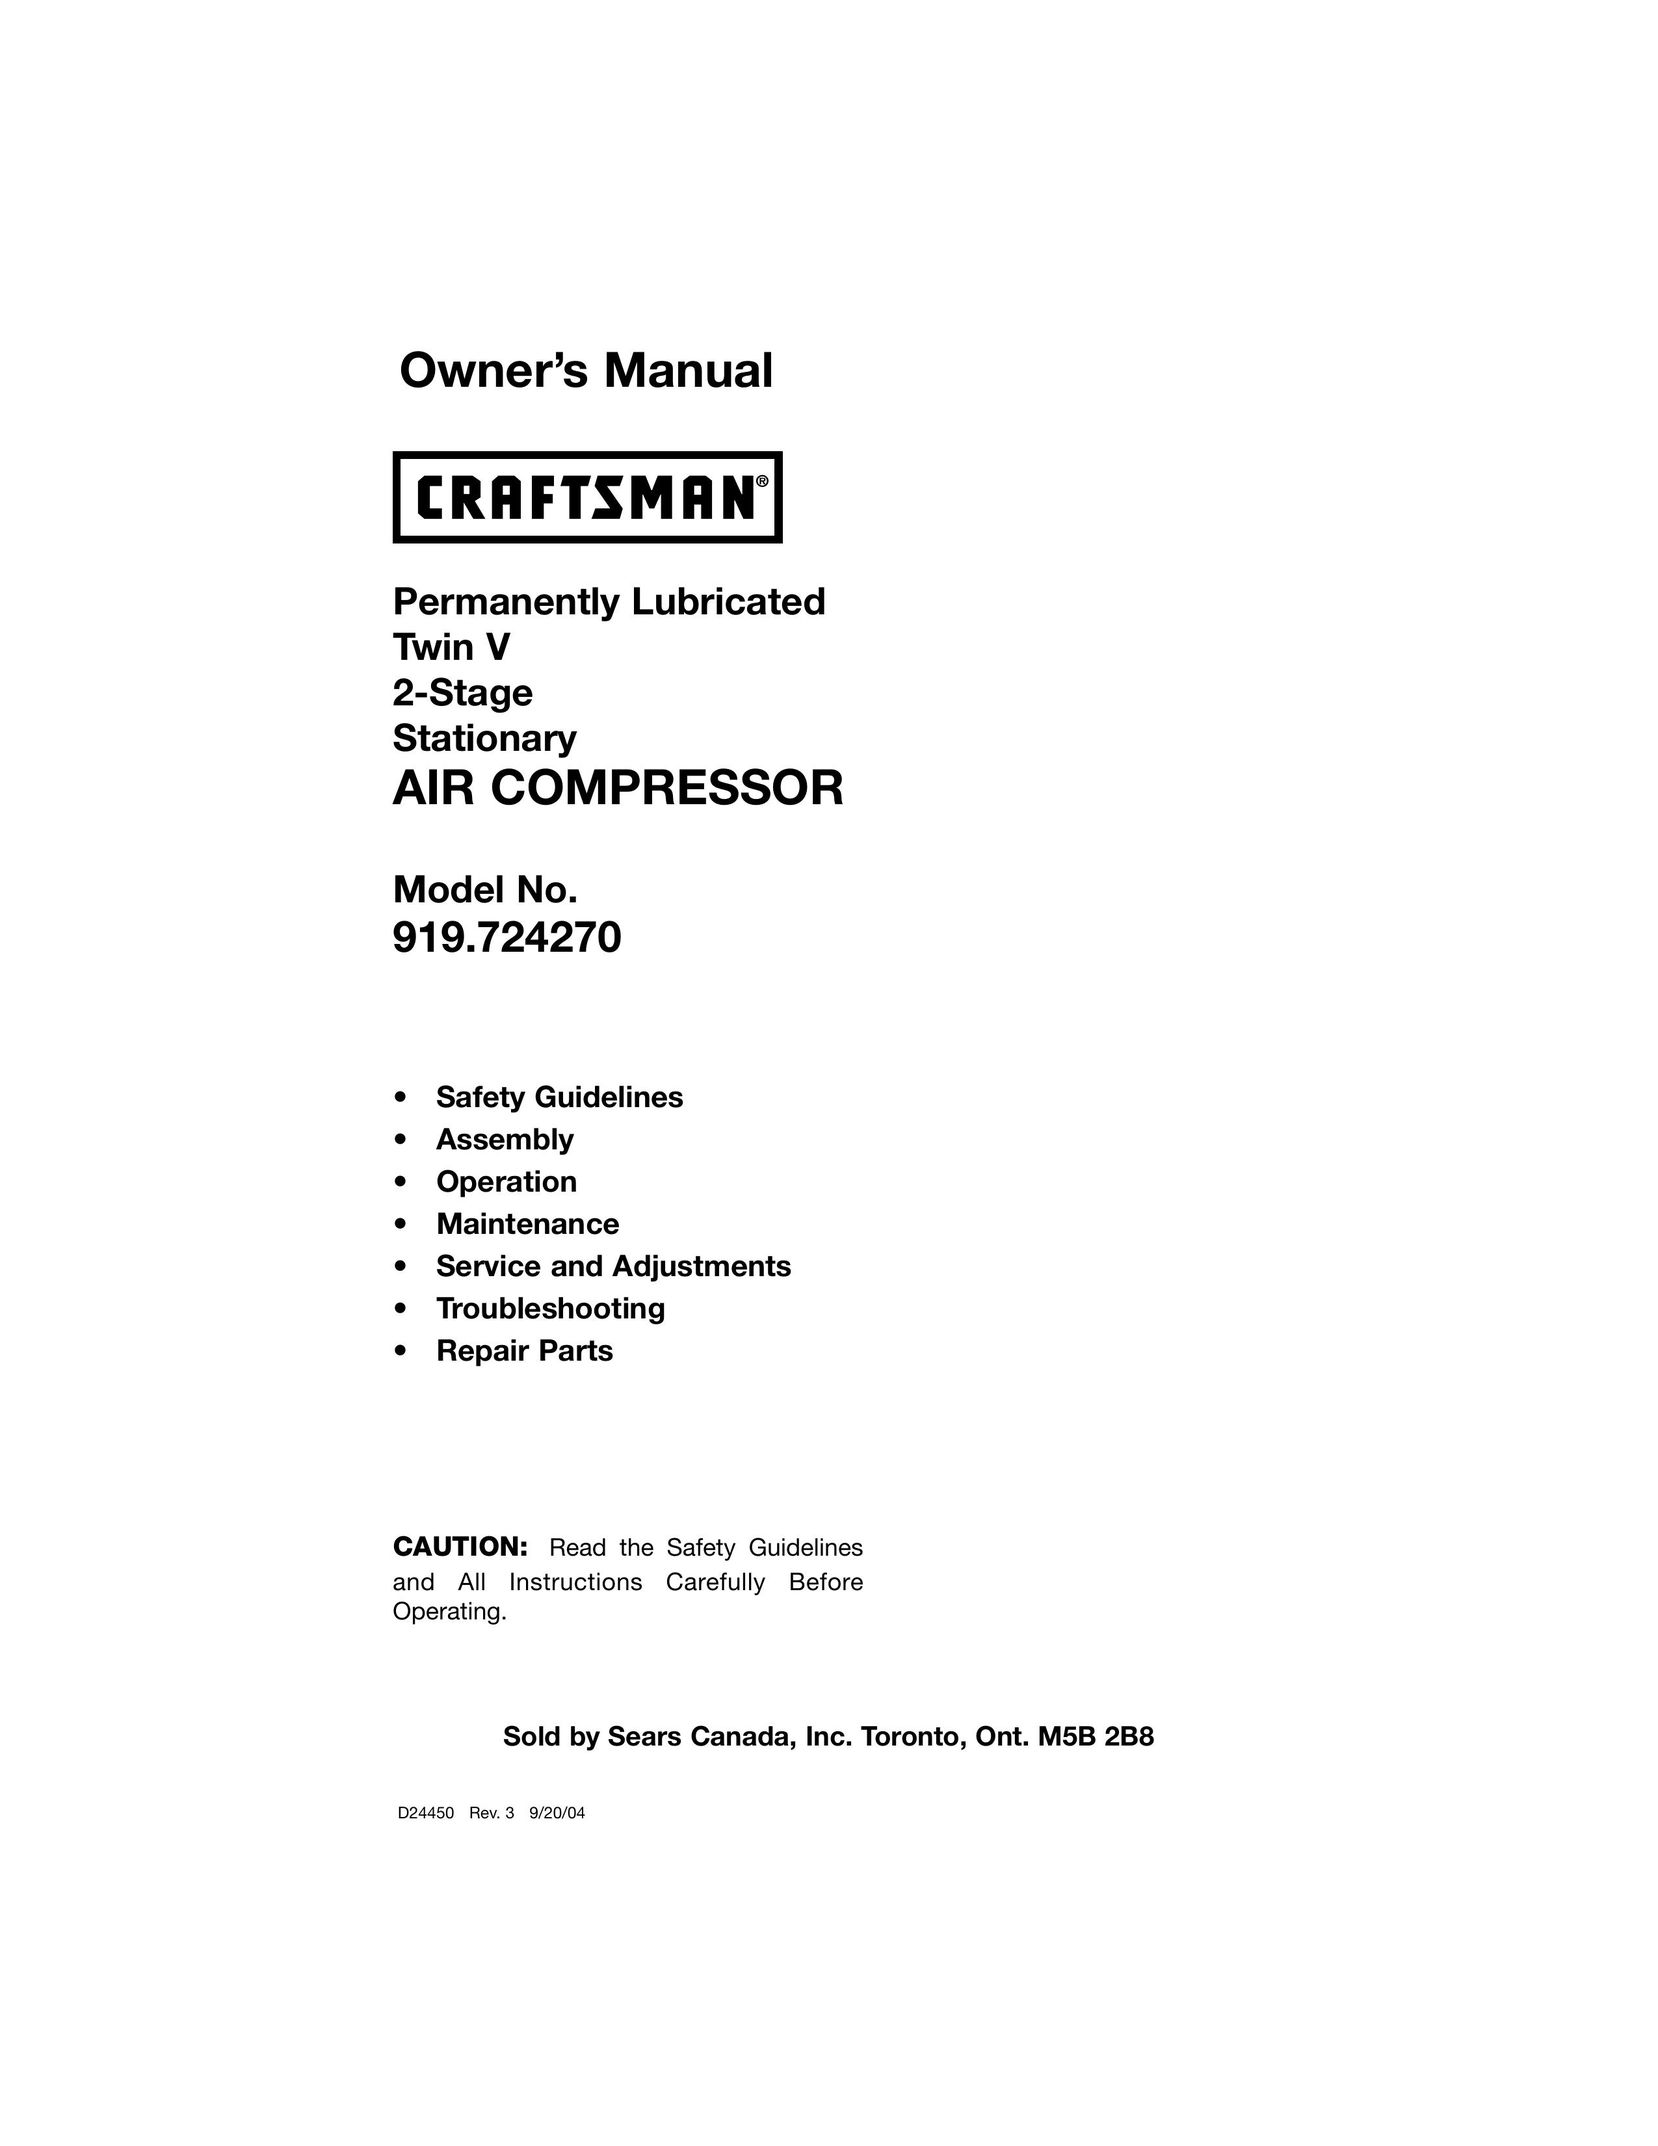 Craftsman 919.72427 Air Compressor User Manual